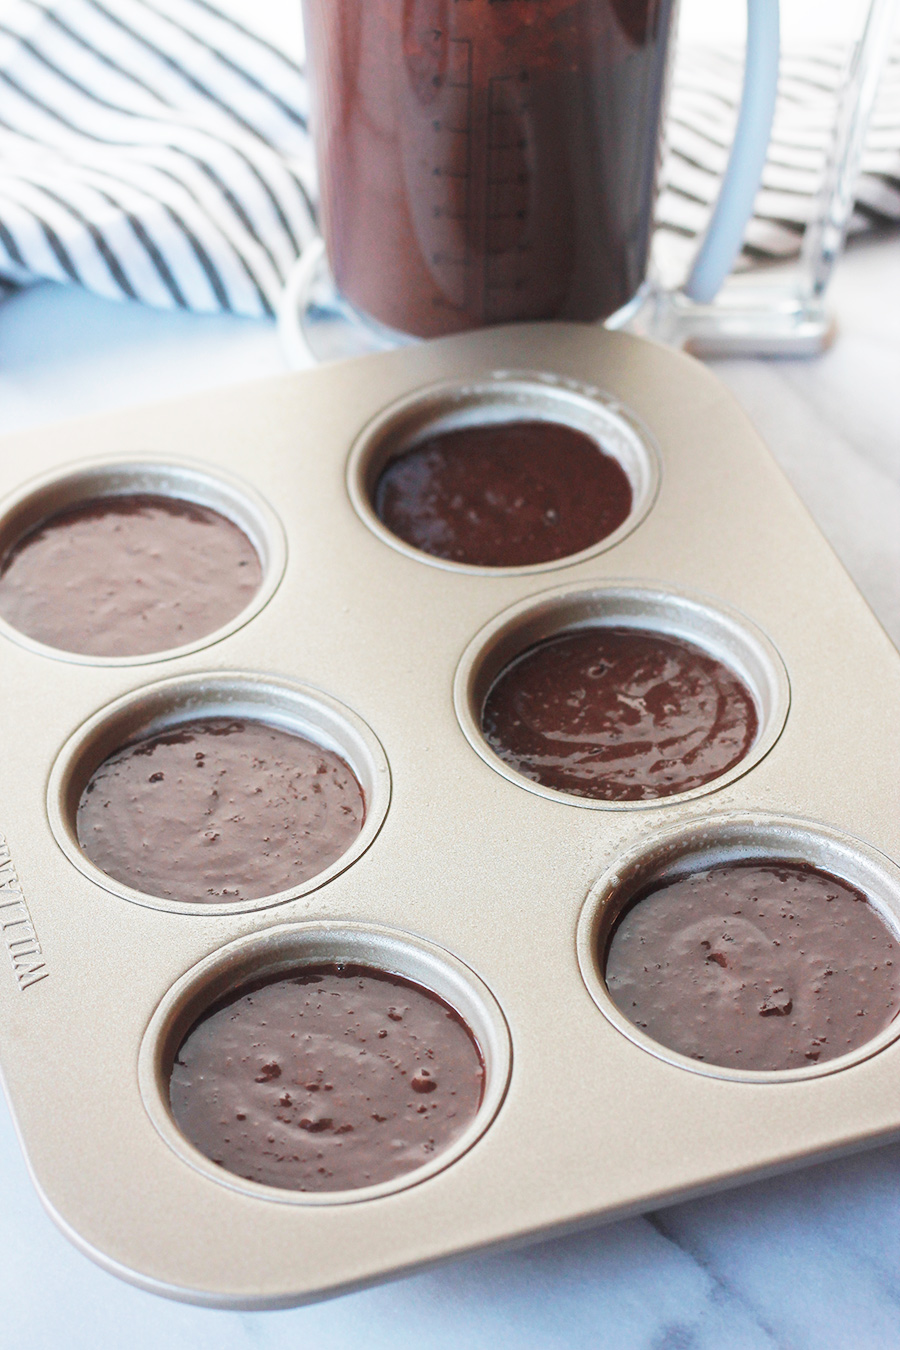 Overhead shot of chocolate-on-chocolate vegan cupcake batter in non-stick muffin pan.